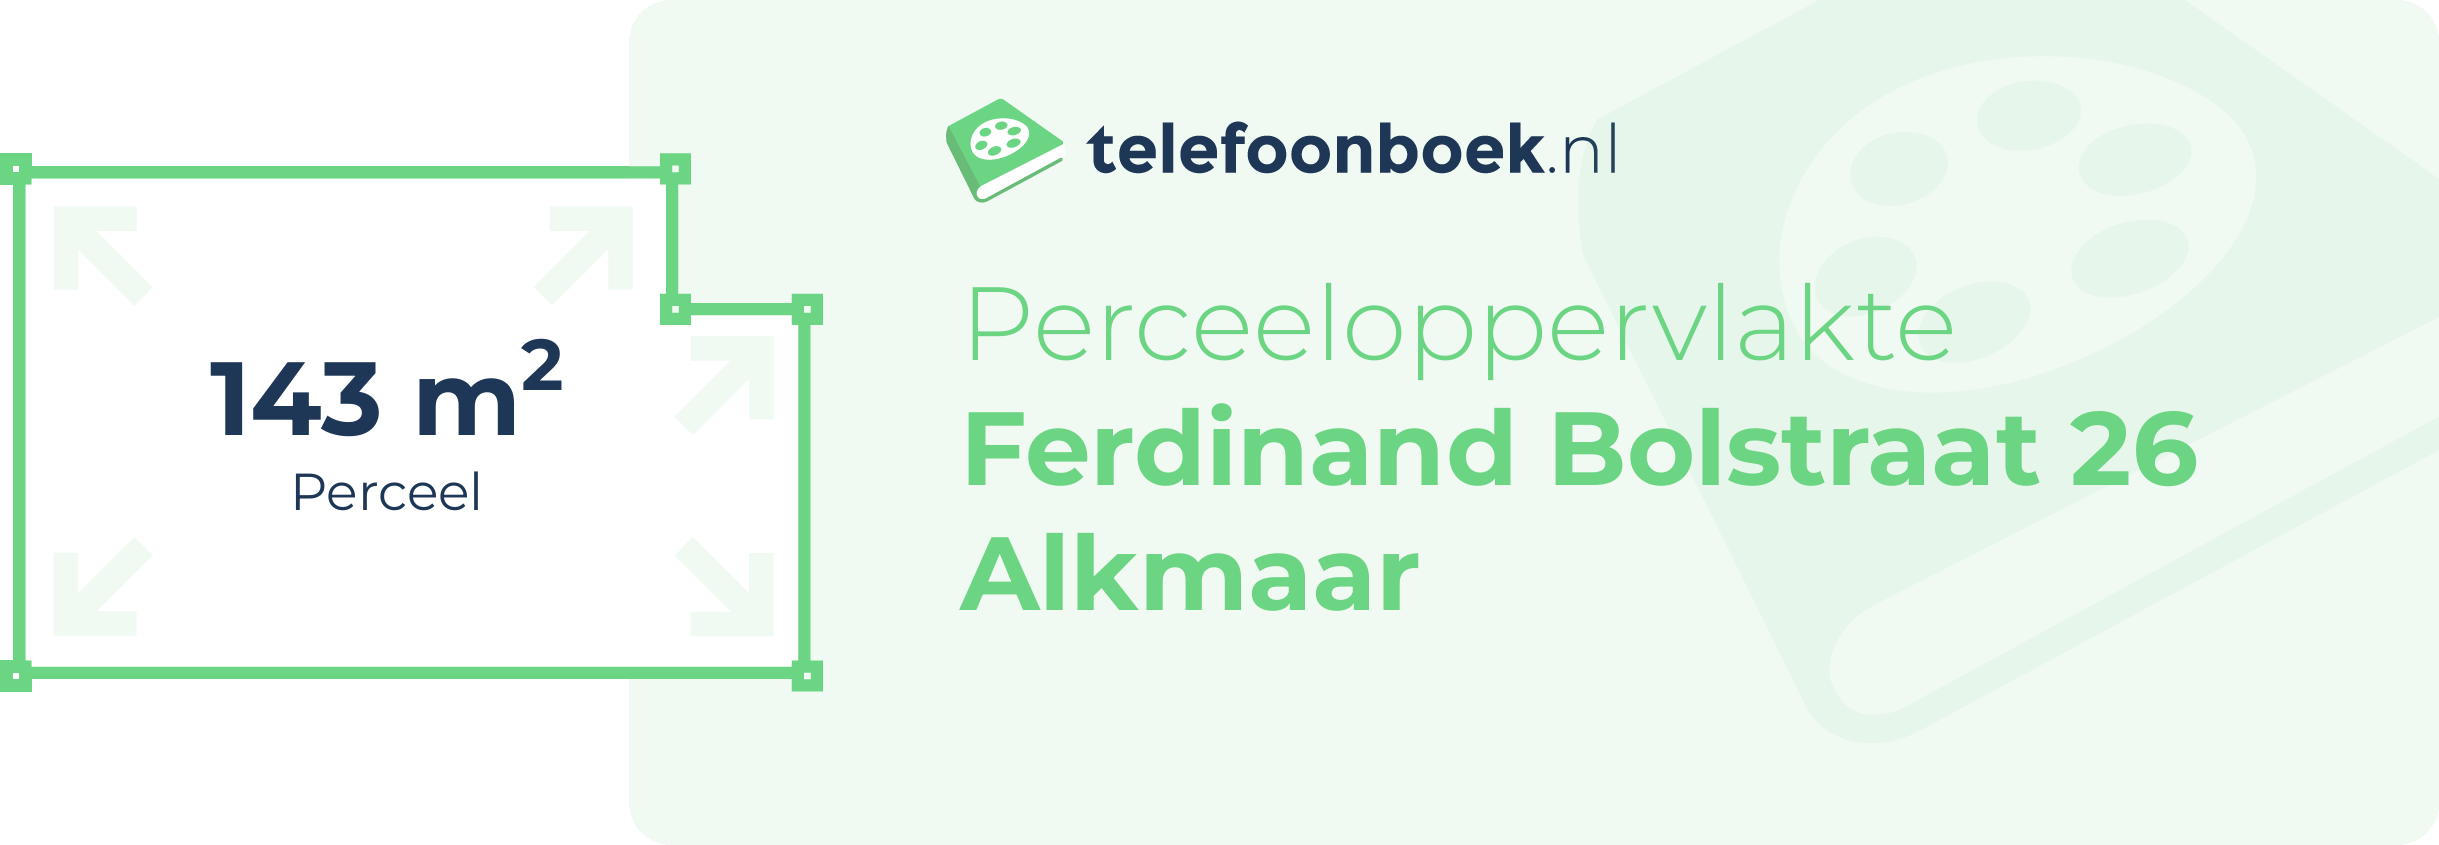 Perceeloppervlakte Ferdinand Bolstraat 26 Alkmaar